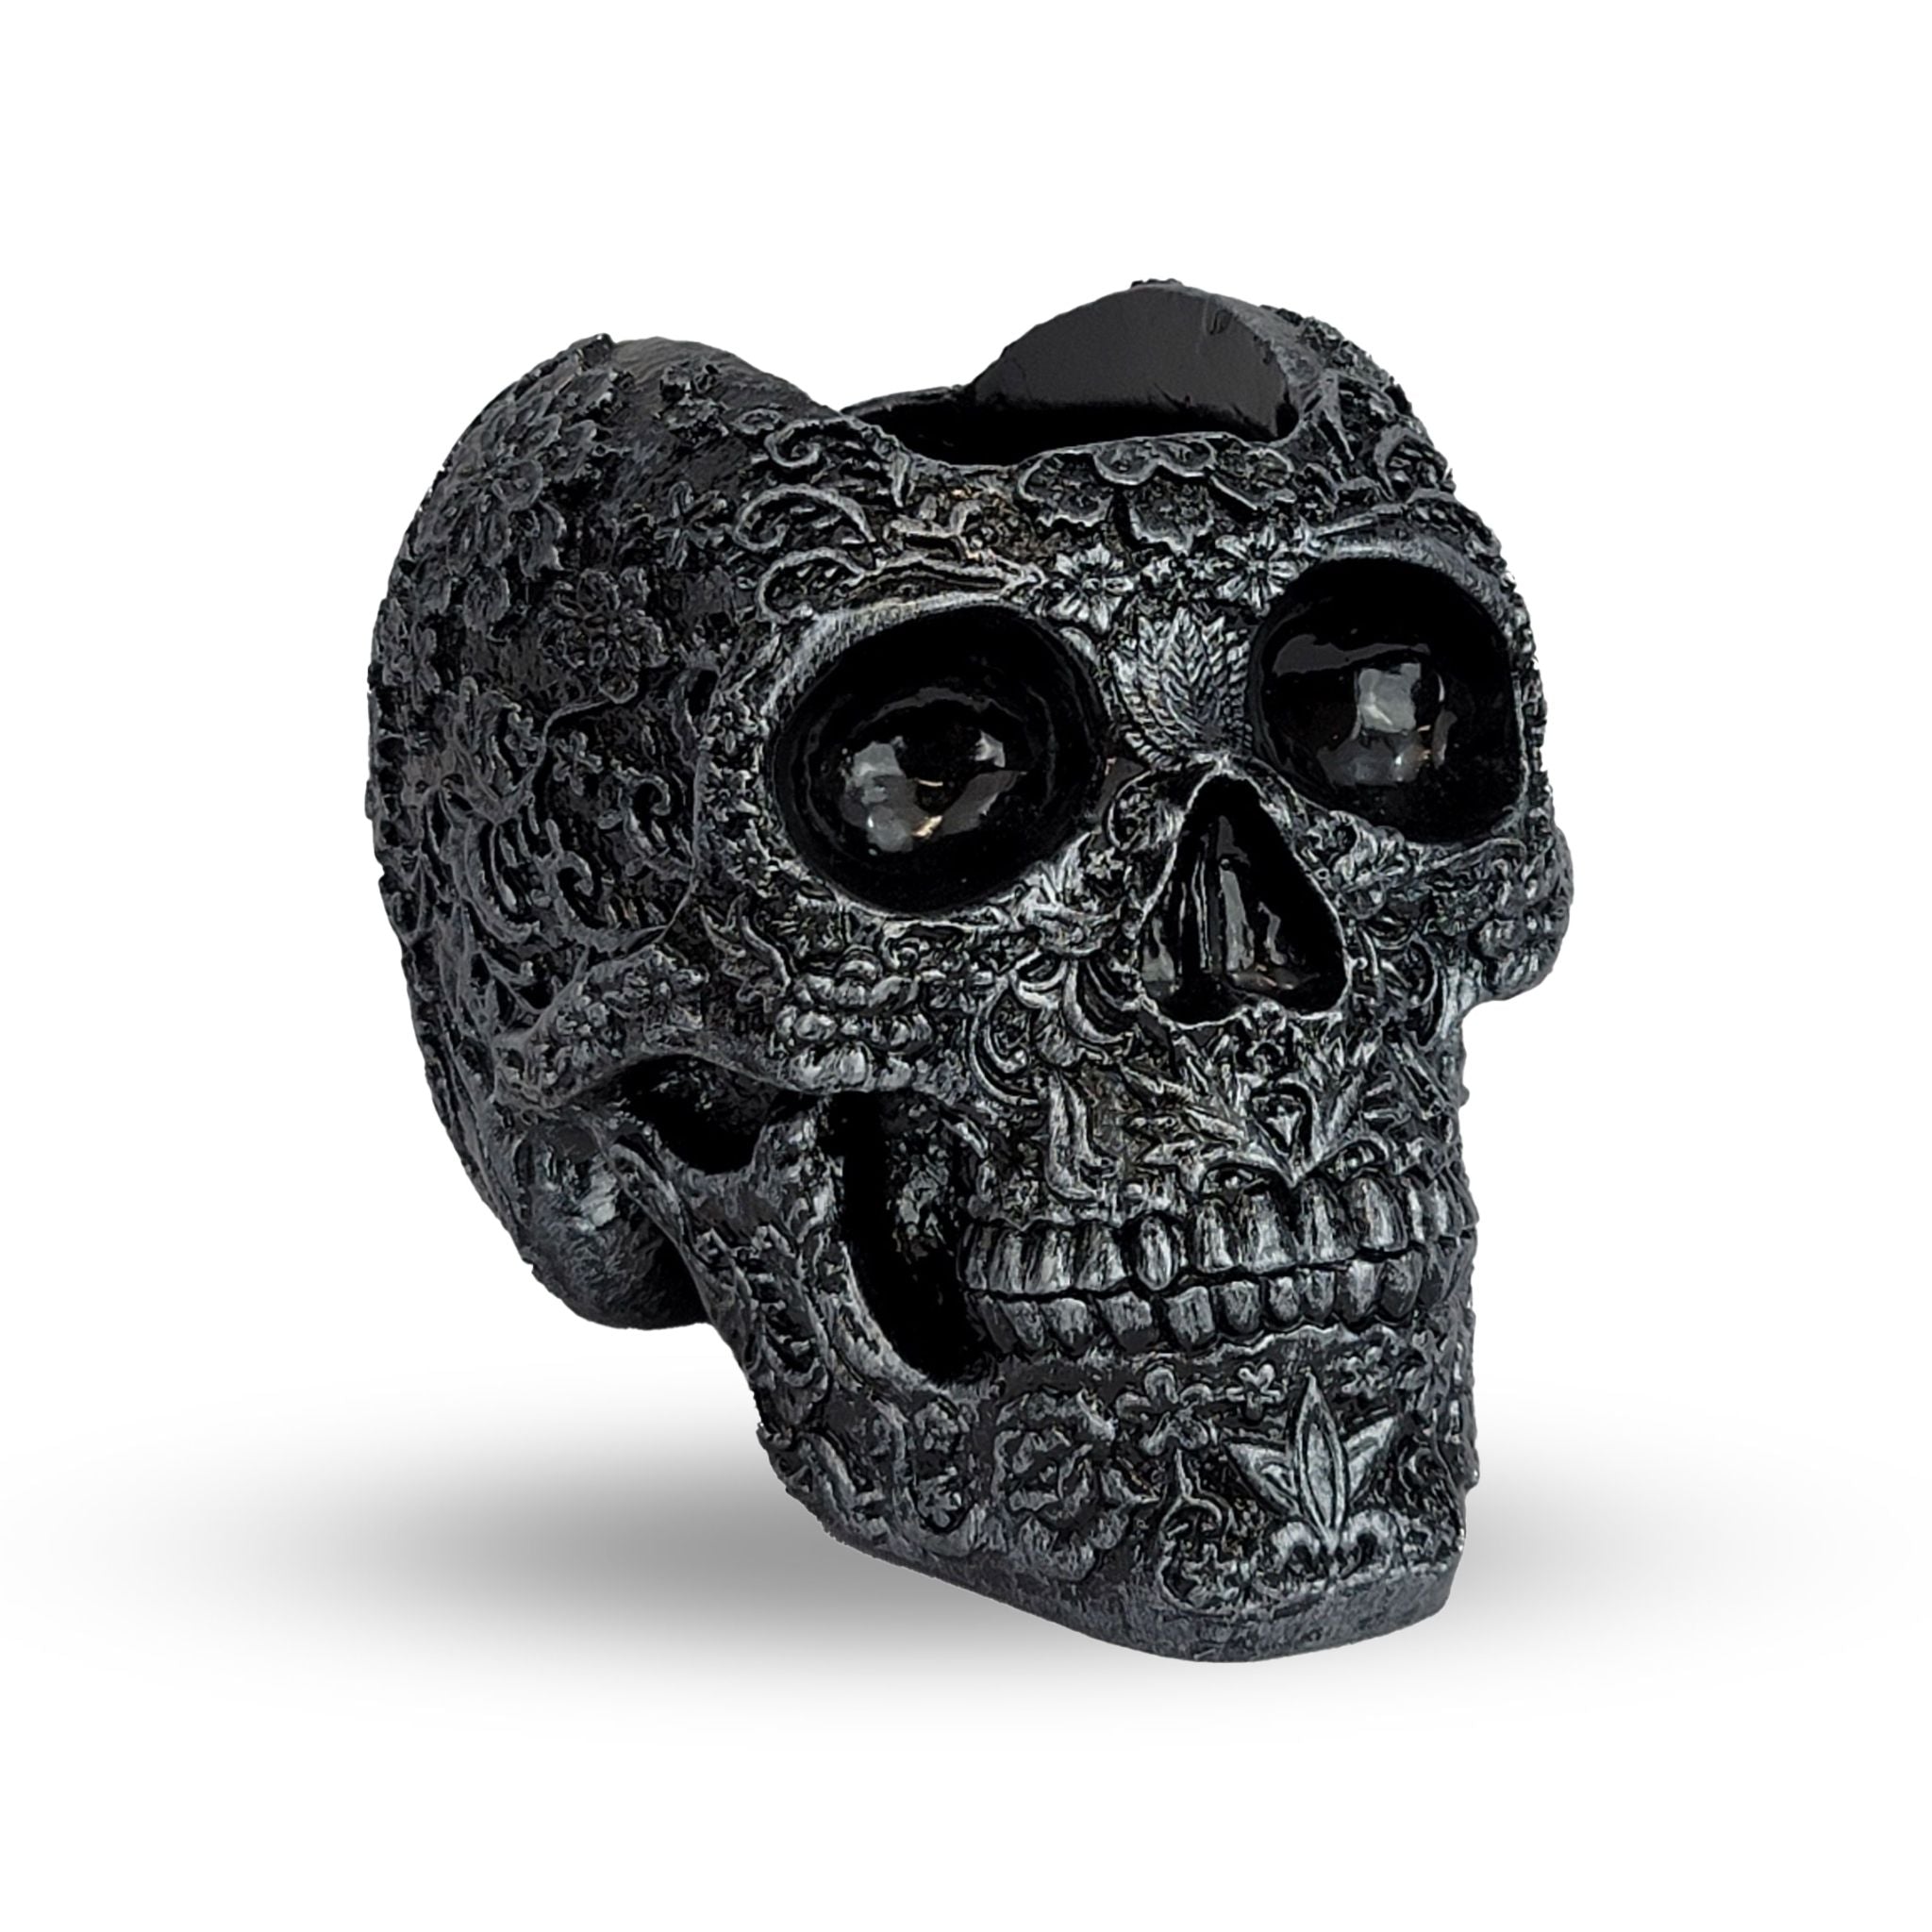 Mohawk Skull Planter - Black-Silver